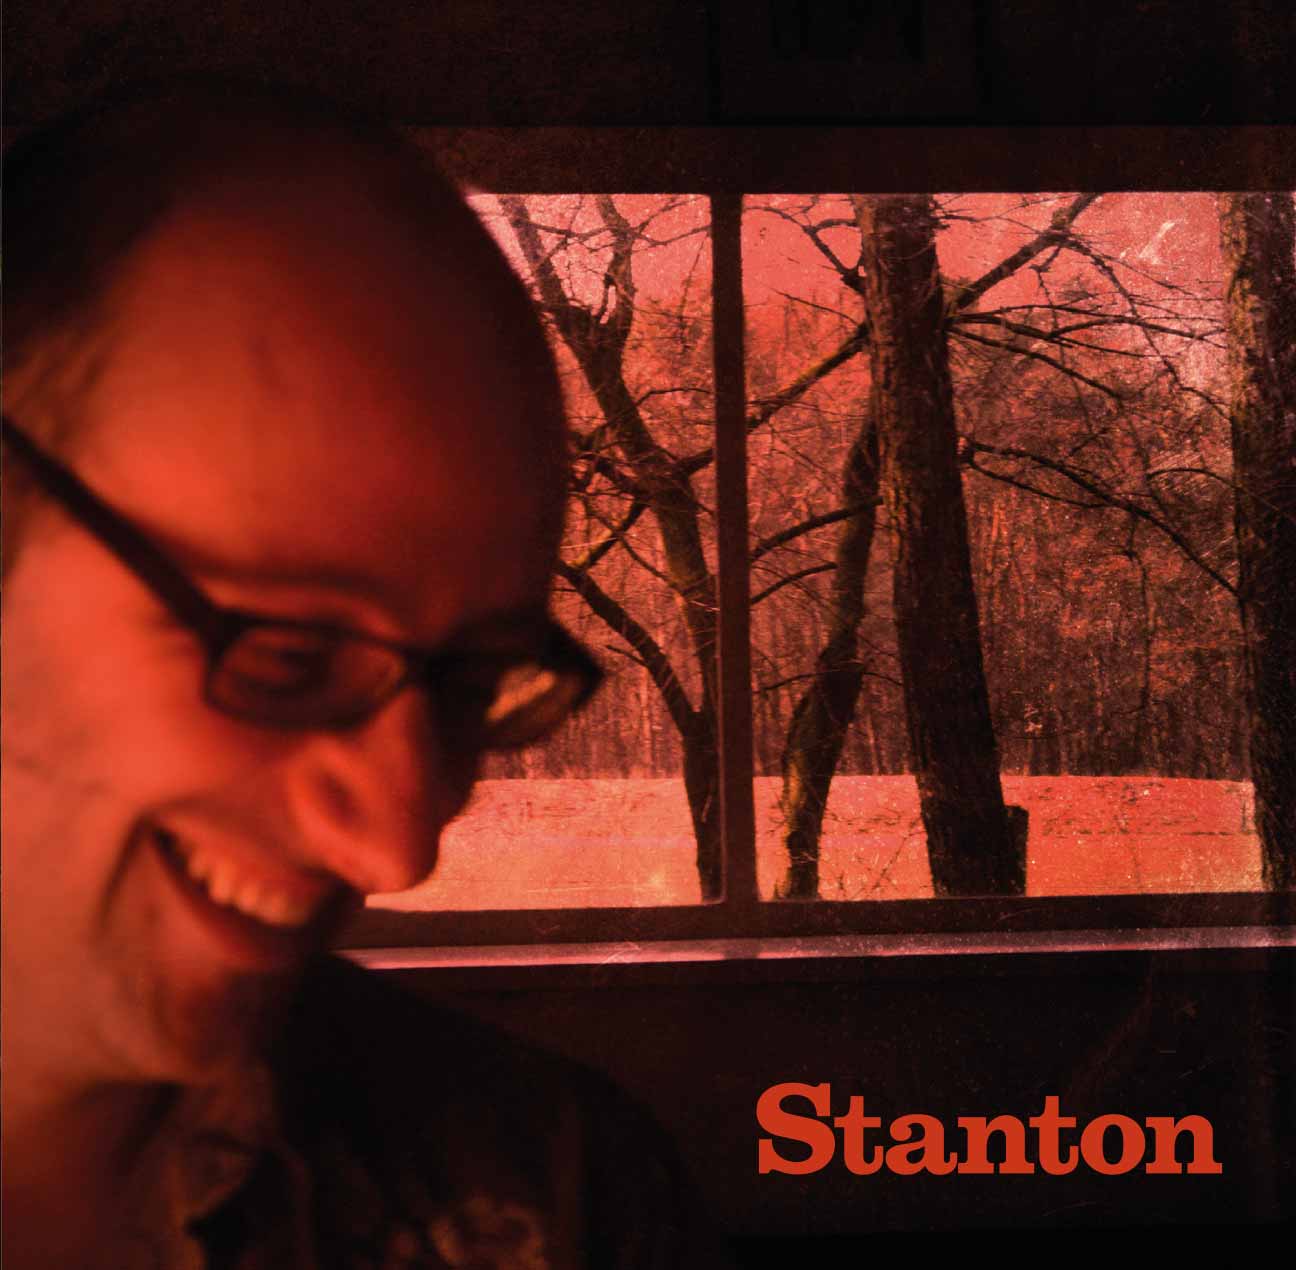 Stanton‘s debut album